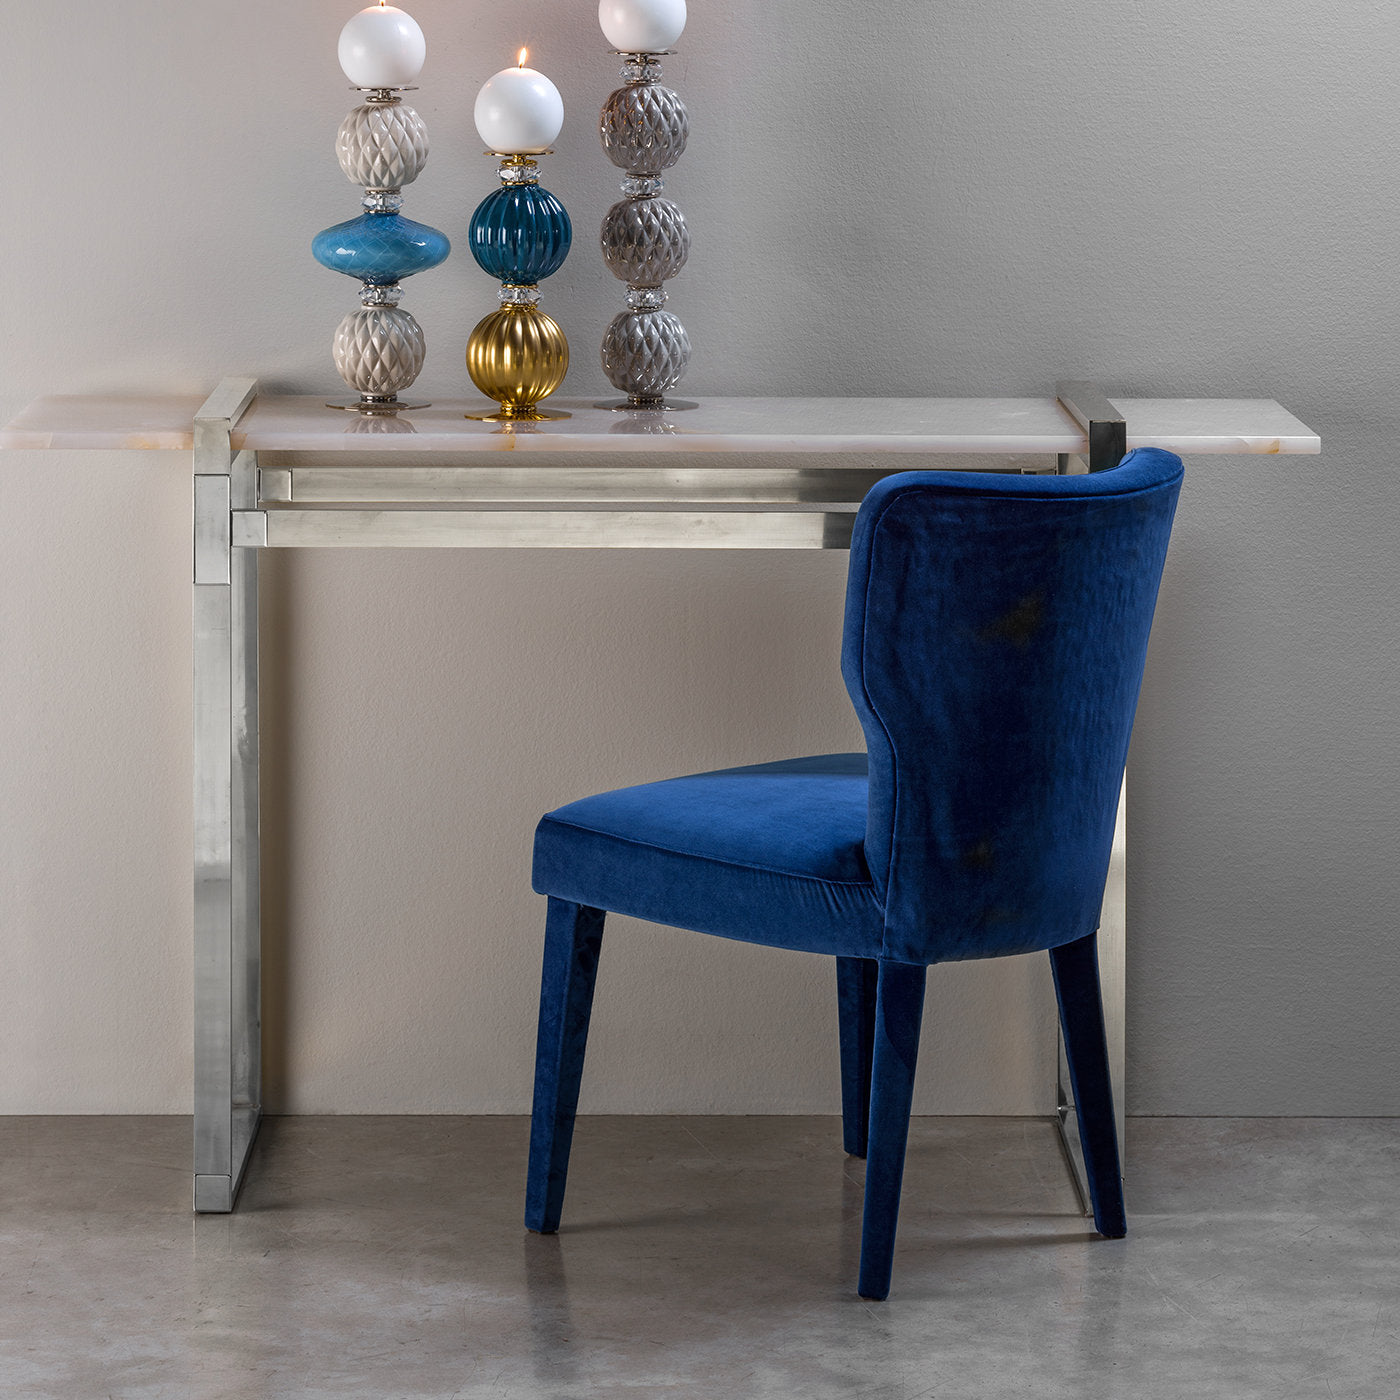 Lady V Blue Chair by Ciarmoli Queda Studio - Alternative view 1